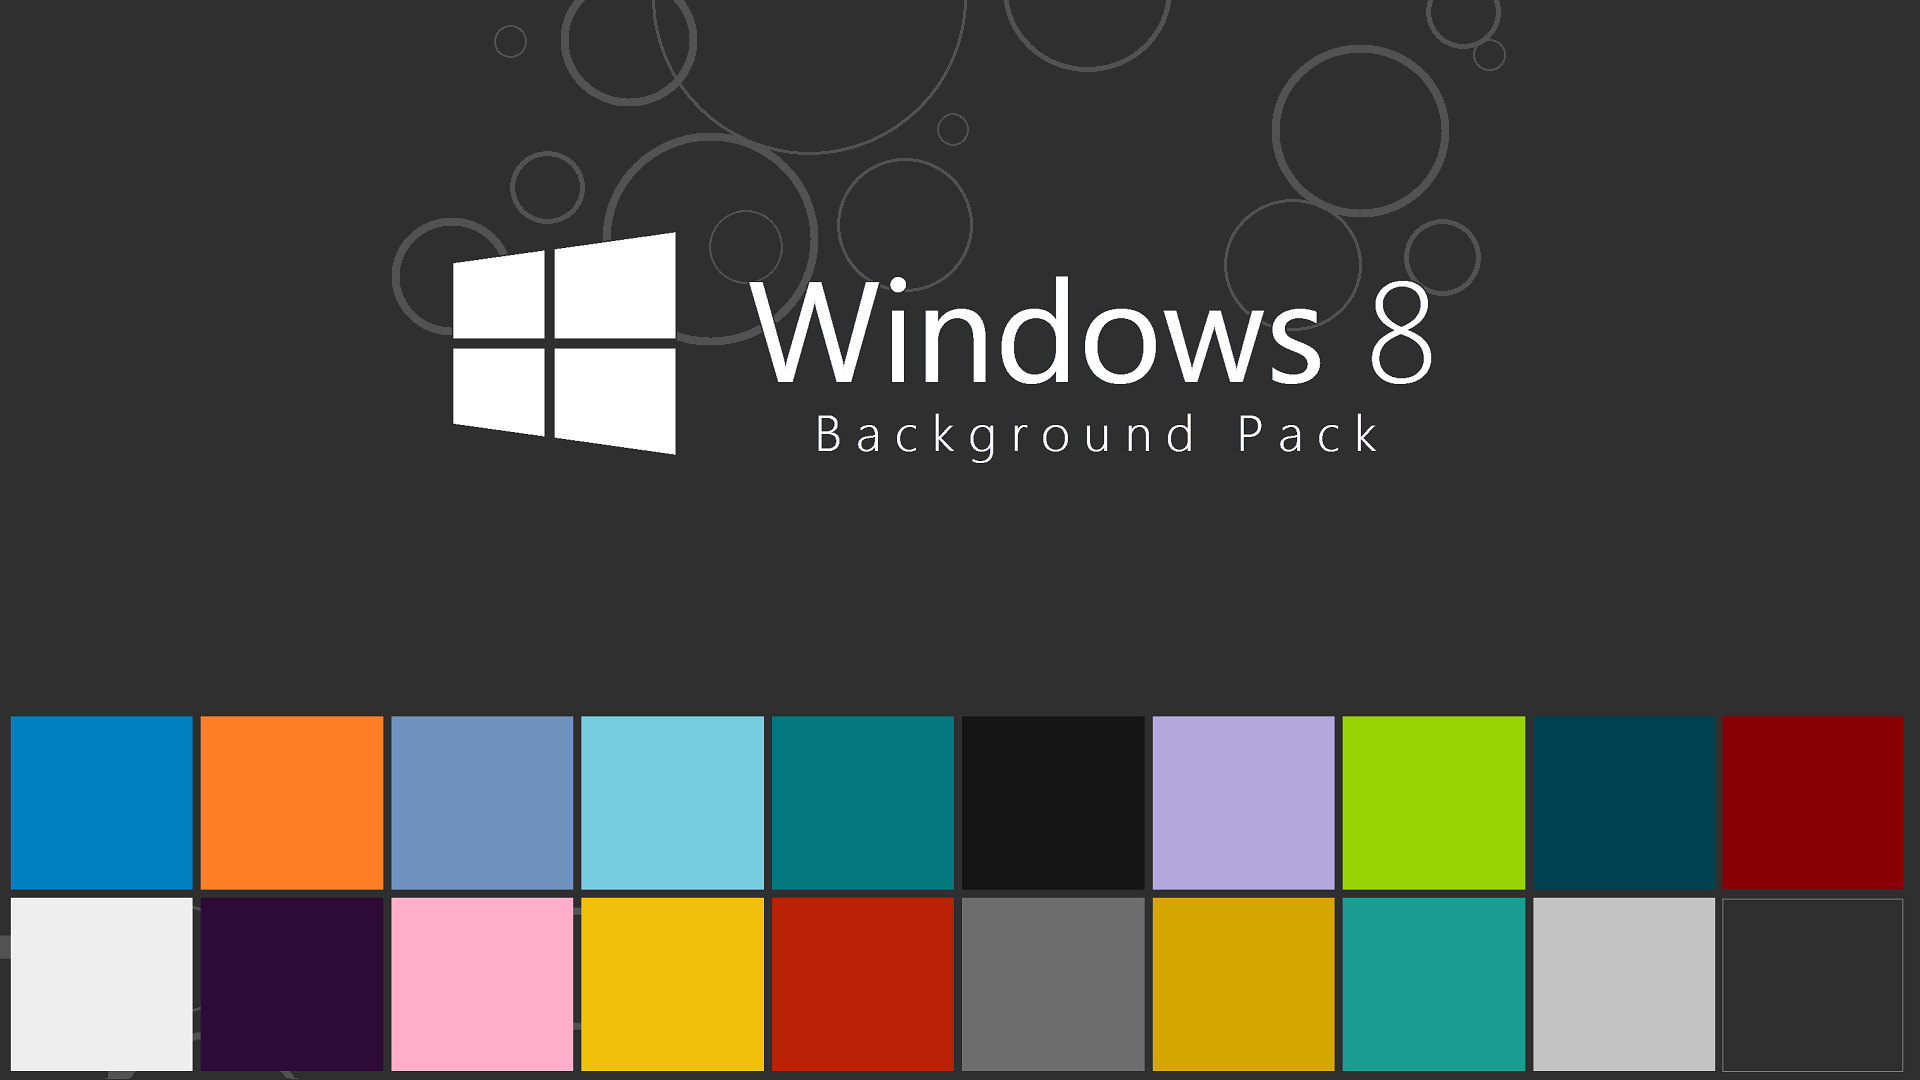 Windows 8 Wallpaper Pack_3 by sagorpirbd on DeviantArt